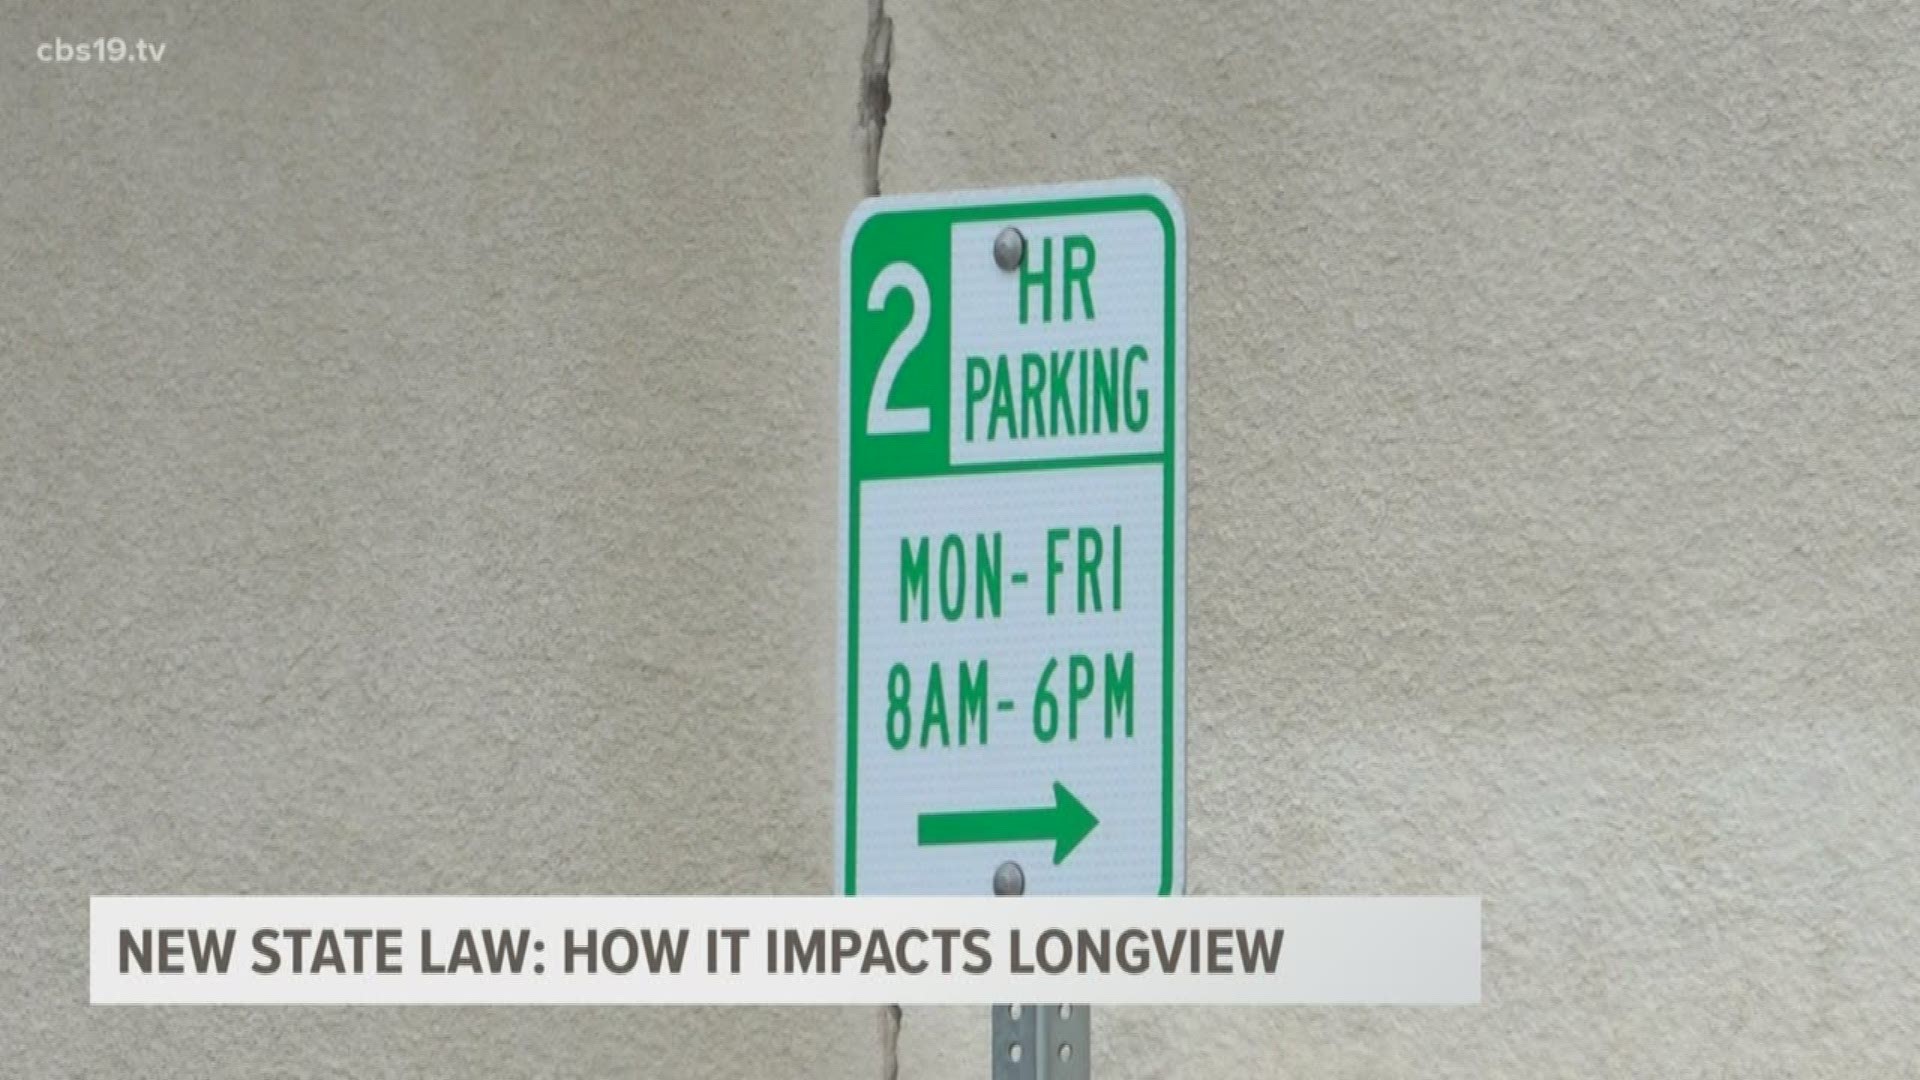 State law triples parking fees in Longview